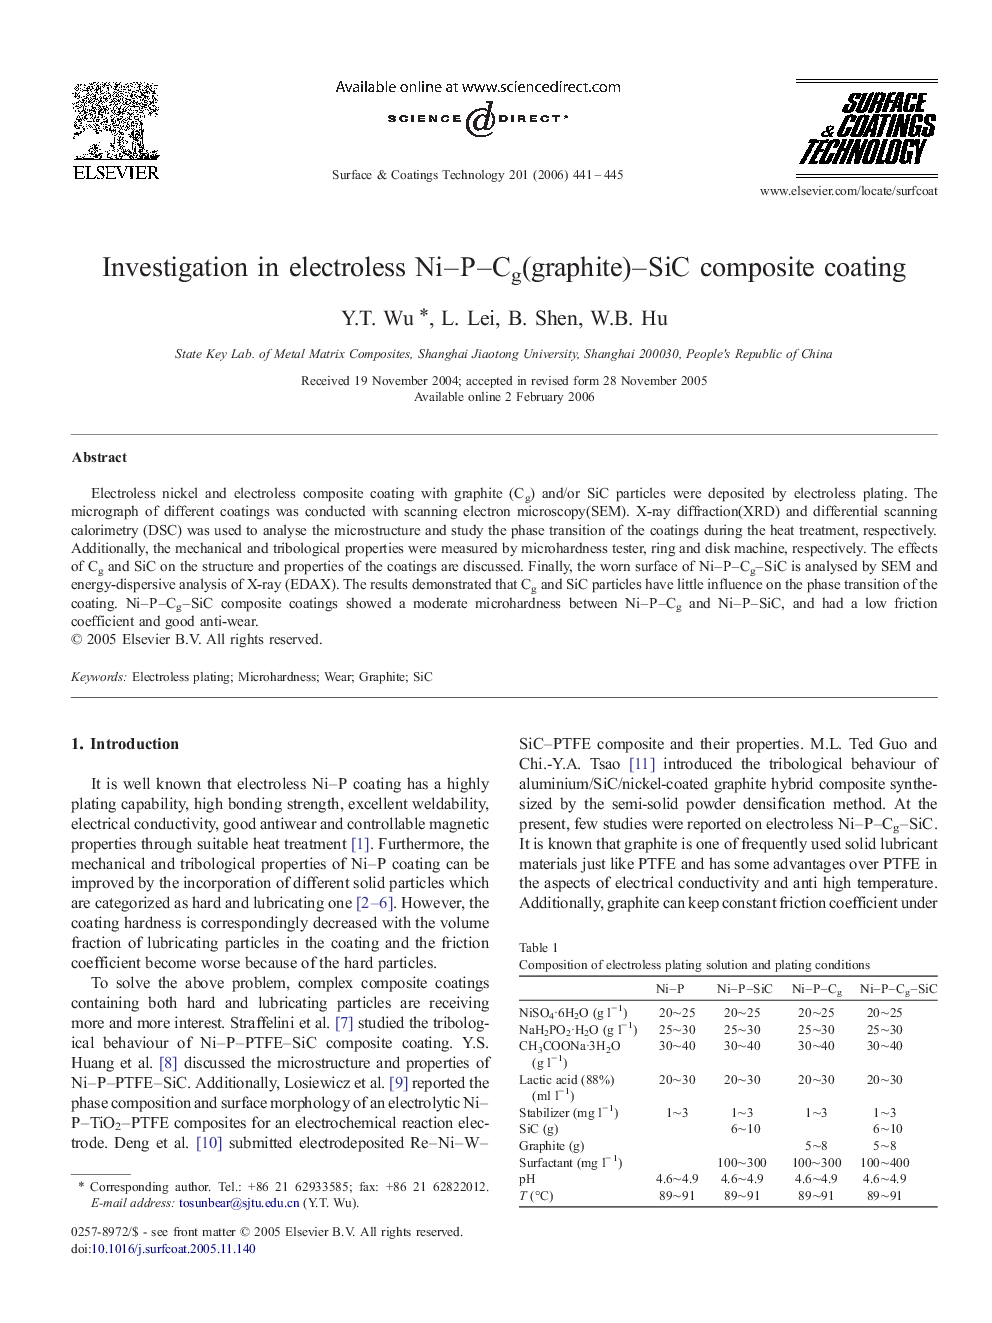 Investigation in electroless Ni-P-Cg(graphite)-SiC composite coating